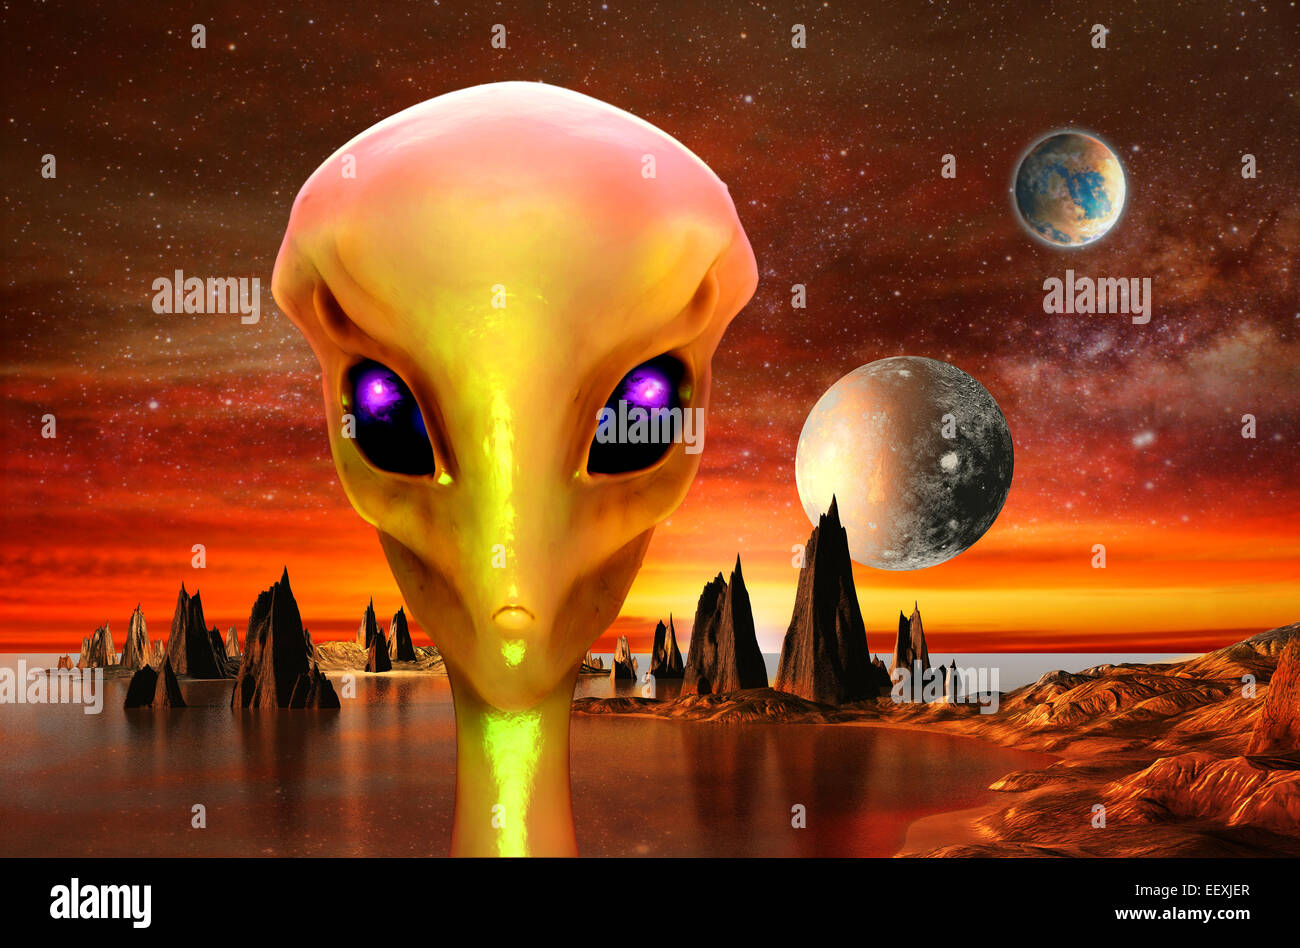 3d render of alien planet and alien. Stock Photo